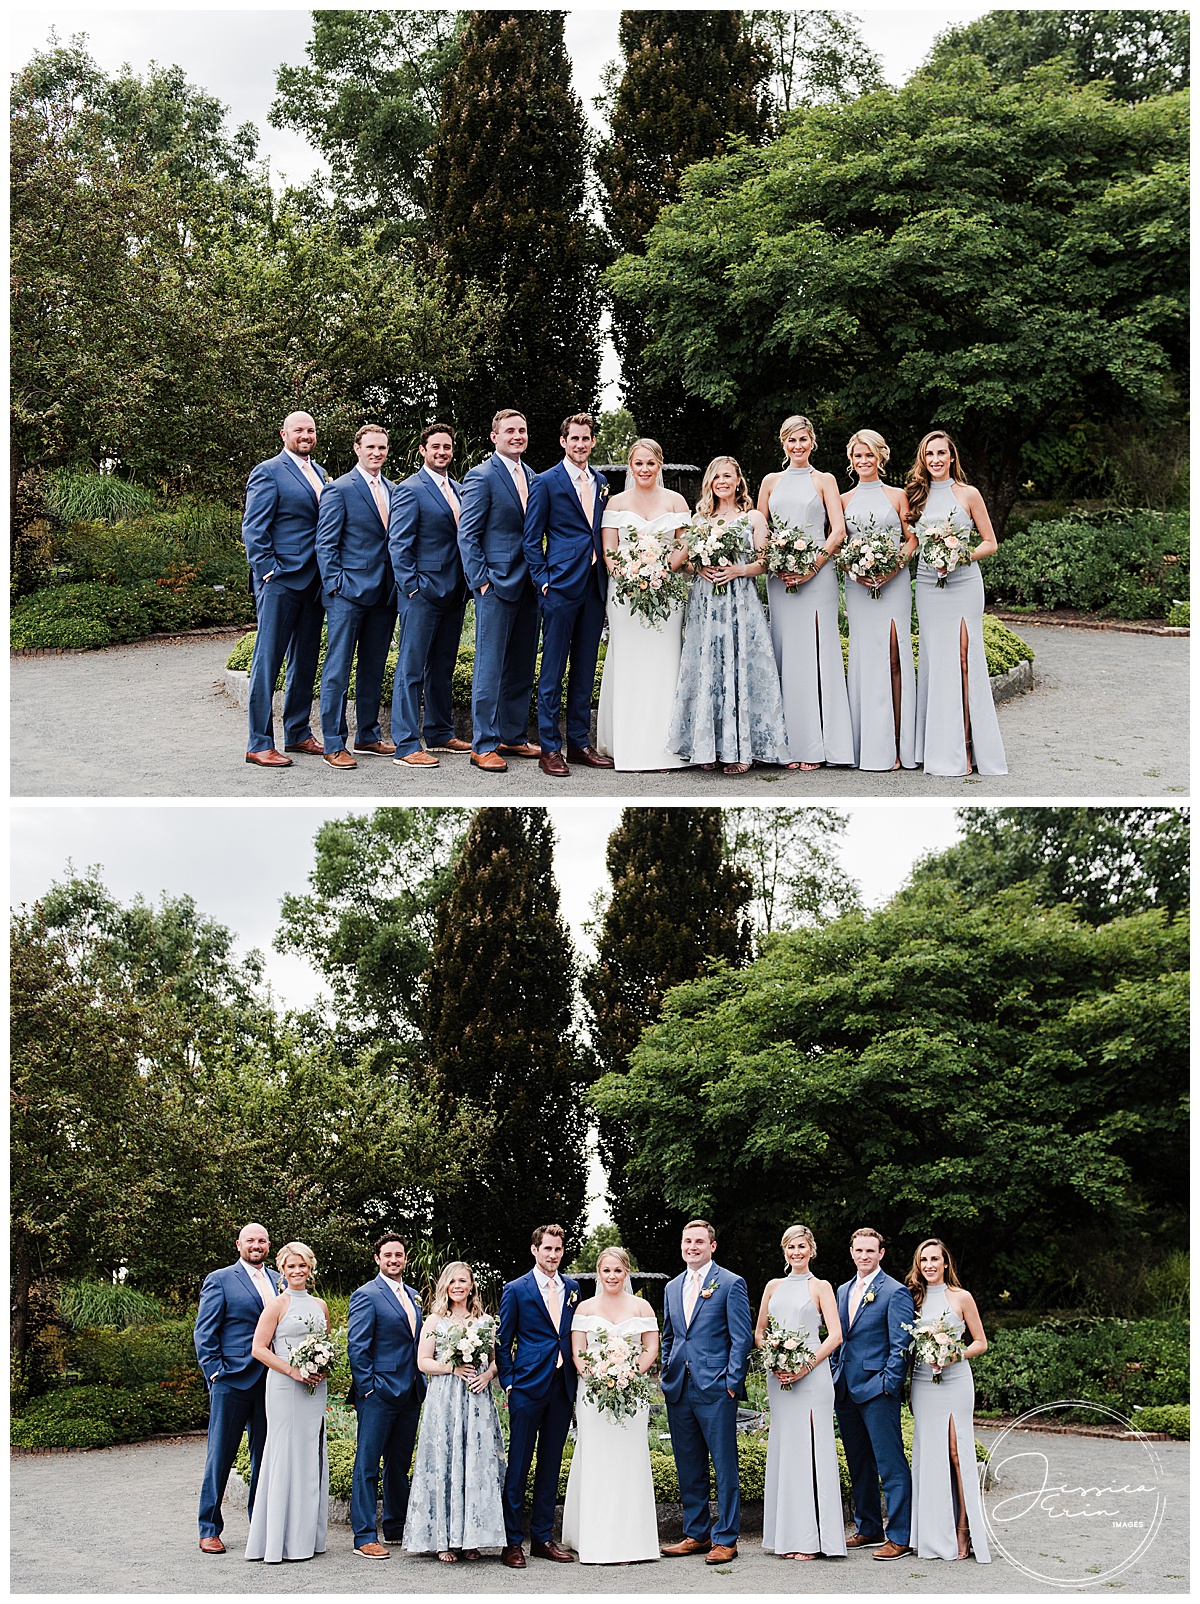 Aubrey Green,Botanical Garden,Garden Wedding,Lauren,Lauren & Ryan,MA Wedding,Ryan,Tower Hill Botanical Garden,Wedding,